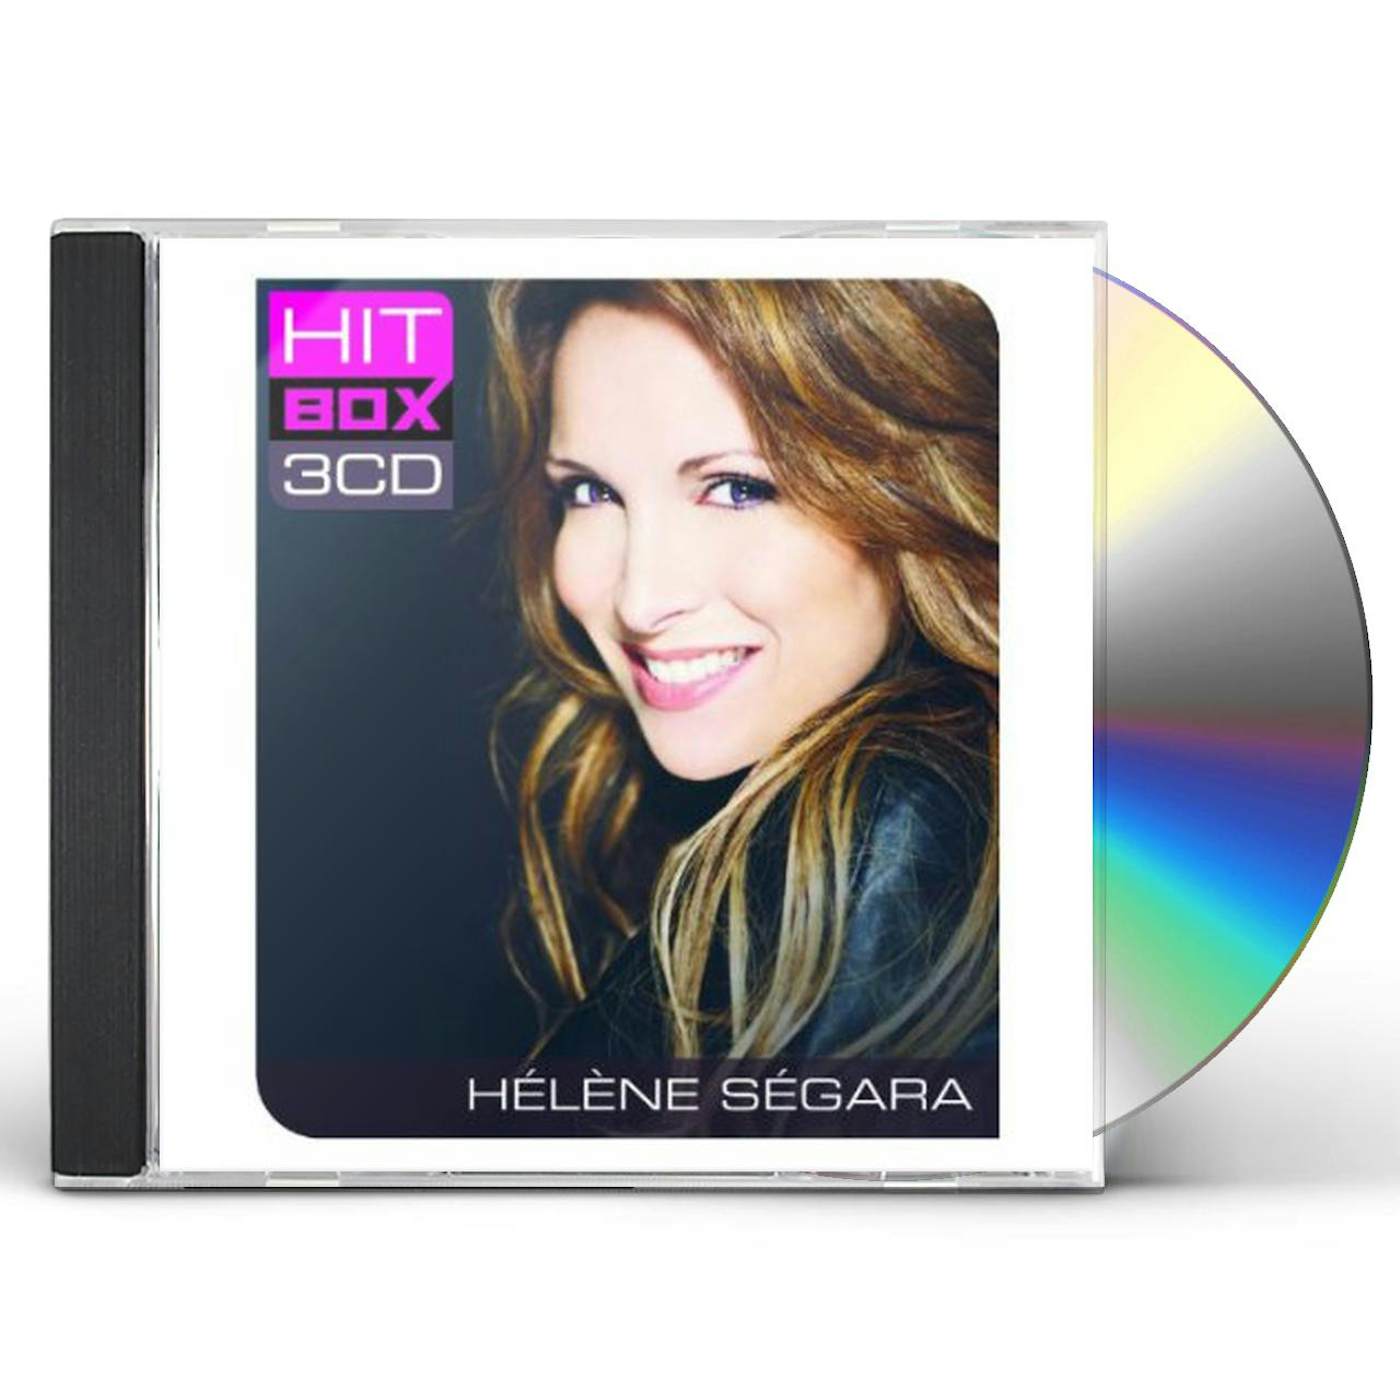 Hélène Ségara HIT BOX 3CD